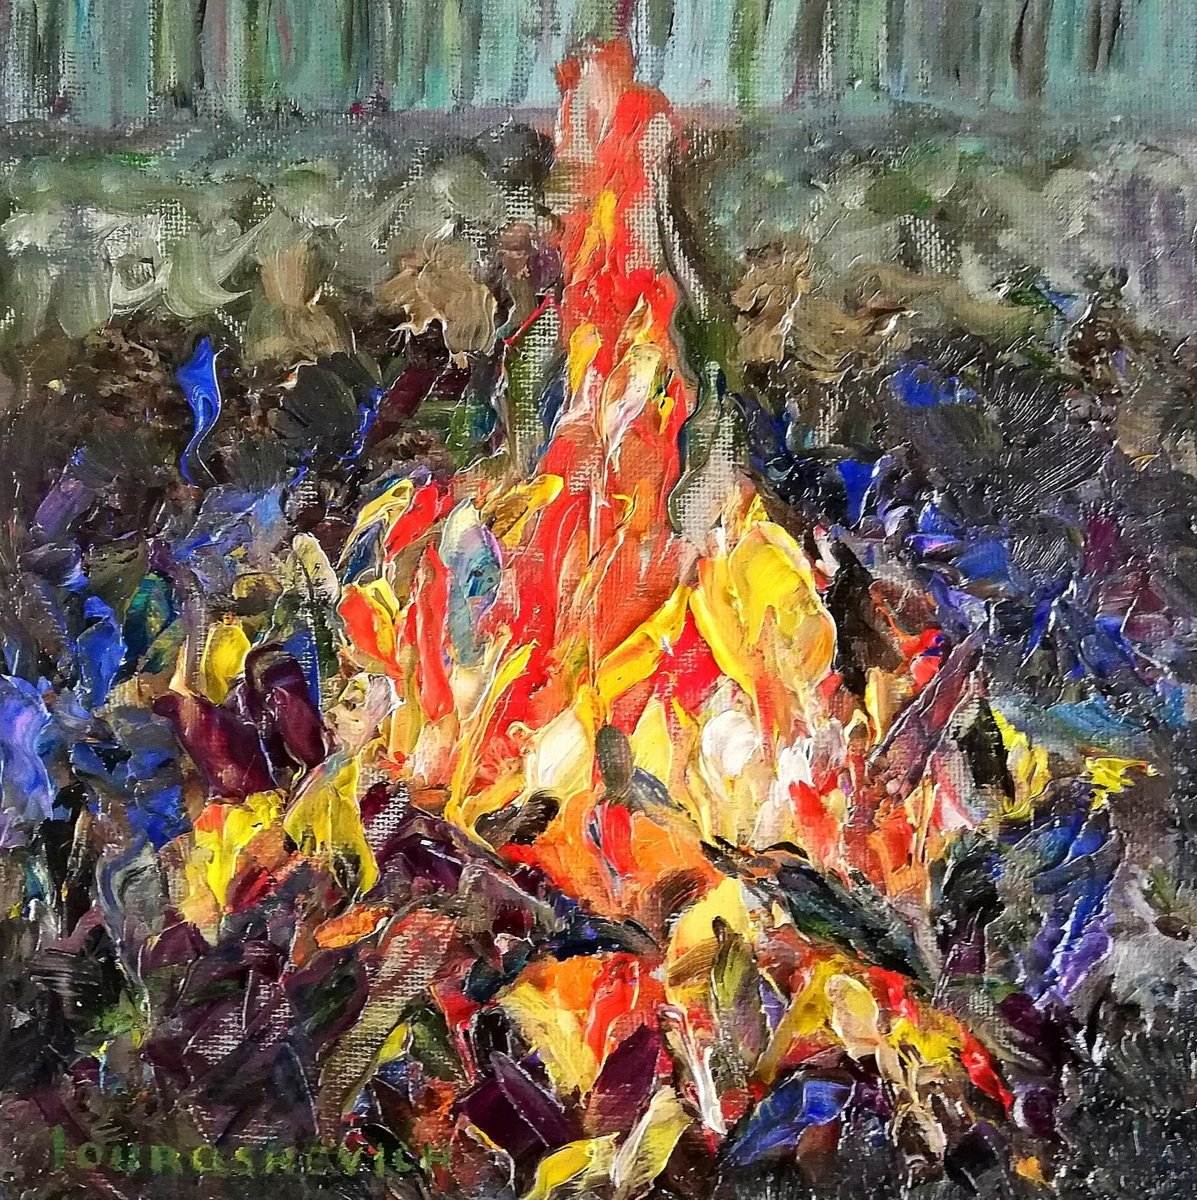 Burning Fire - Campfire 20x20cm/8x8 in by Katia Ricci